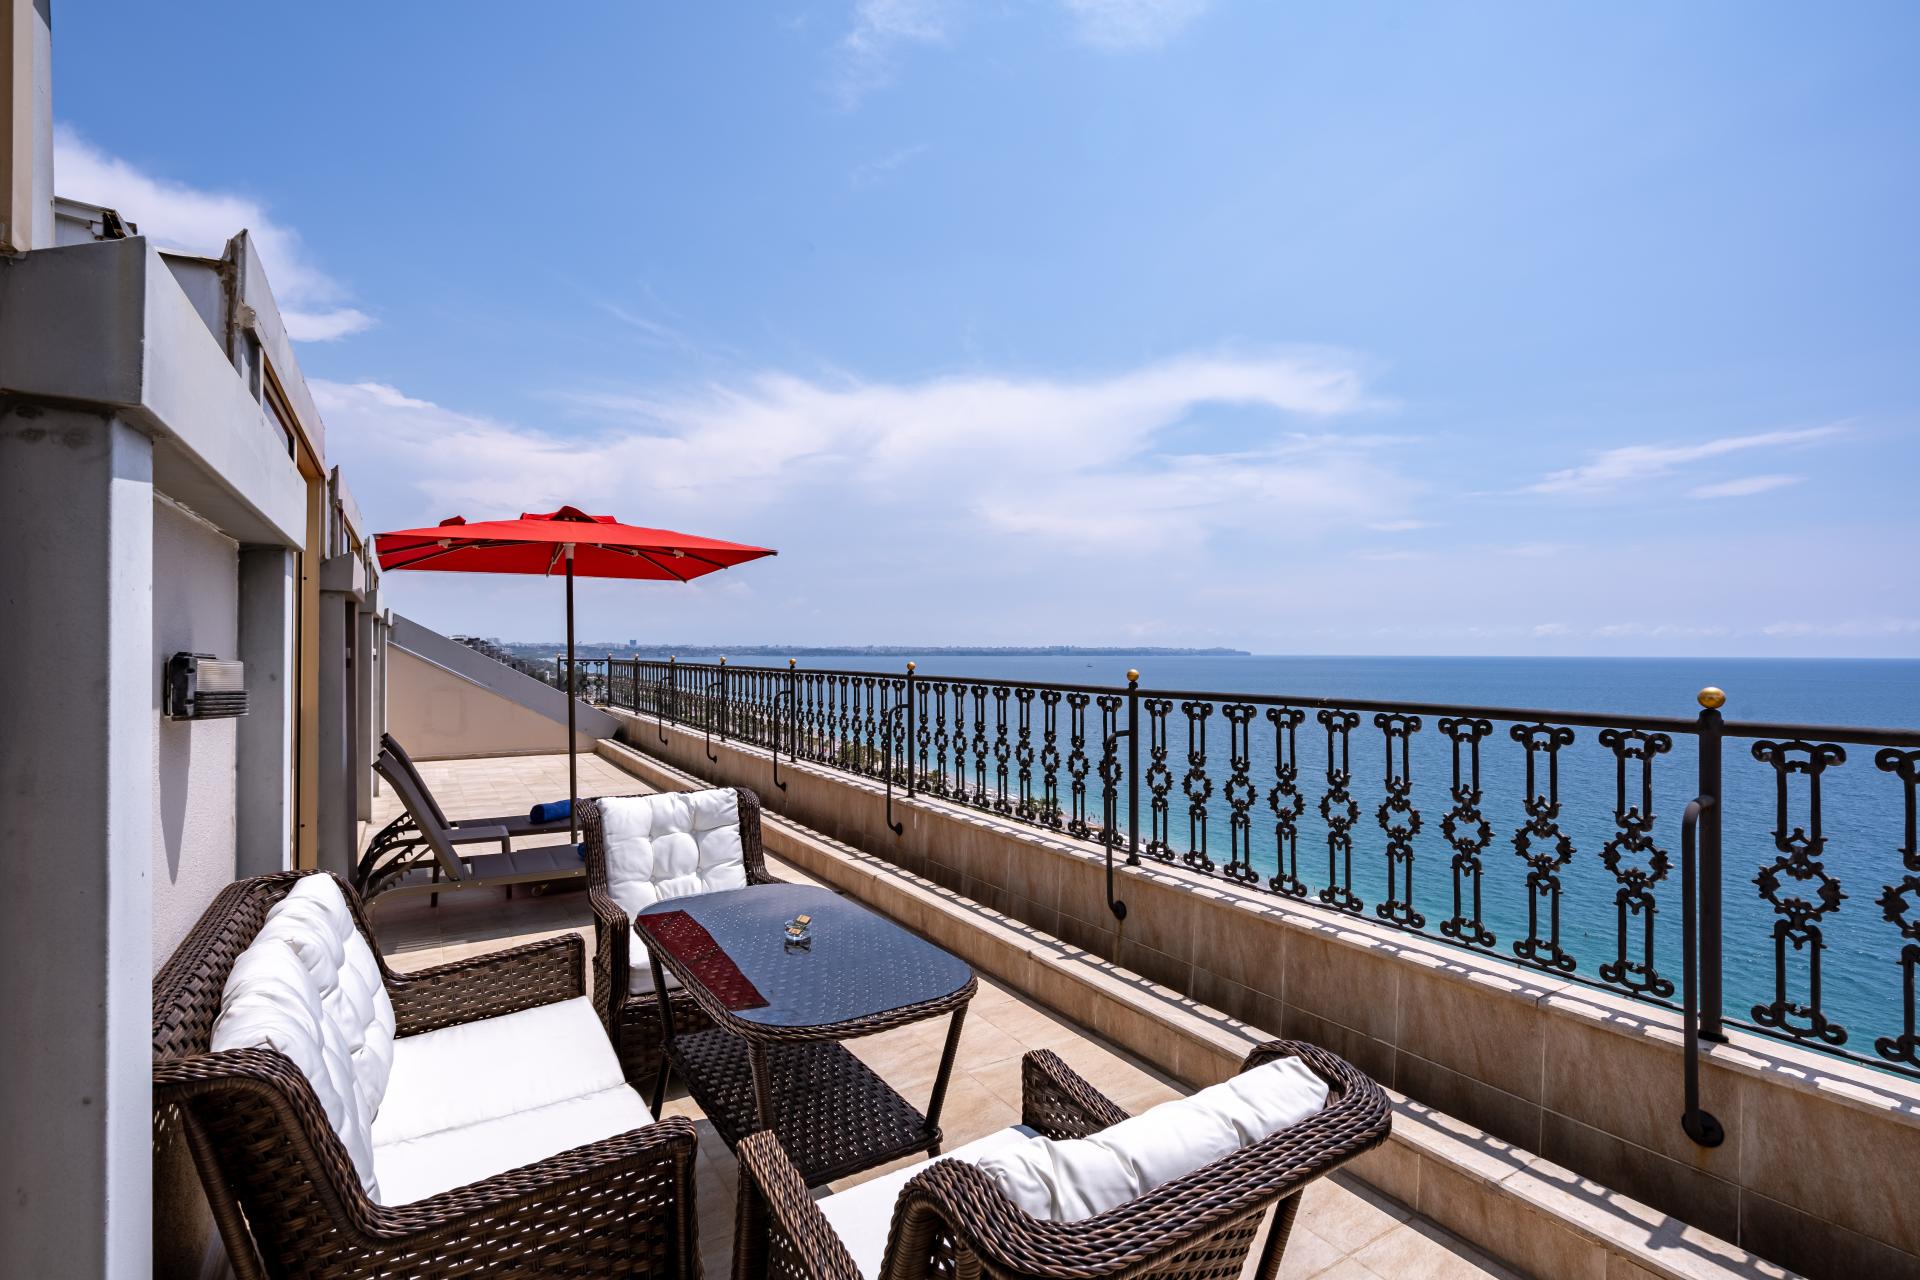 Hotel Megasaray West Beach Antalya - Turcja